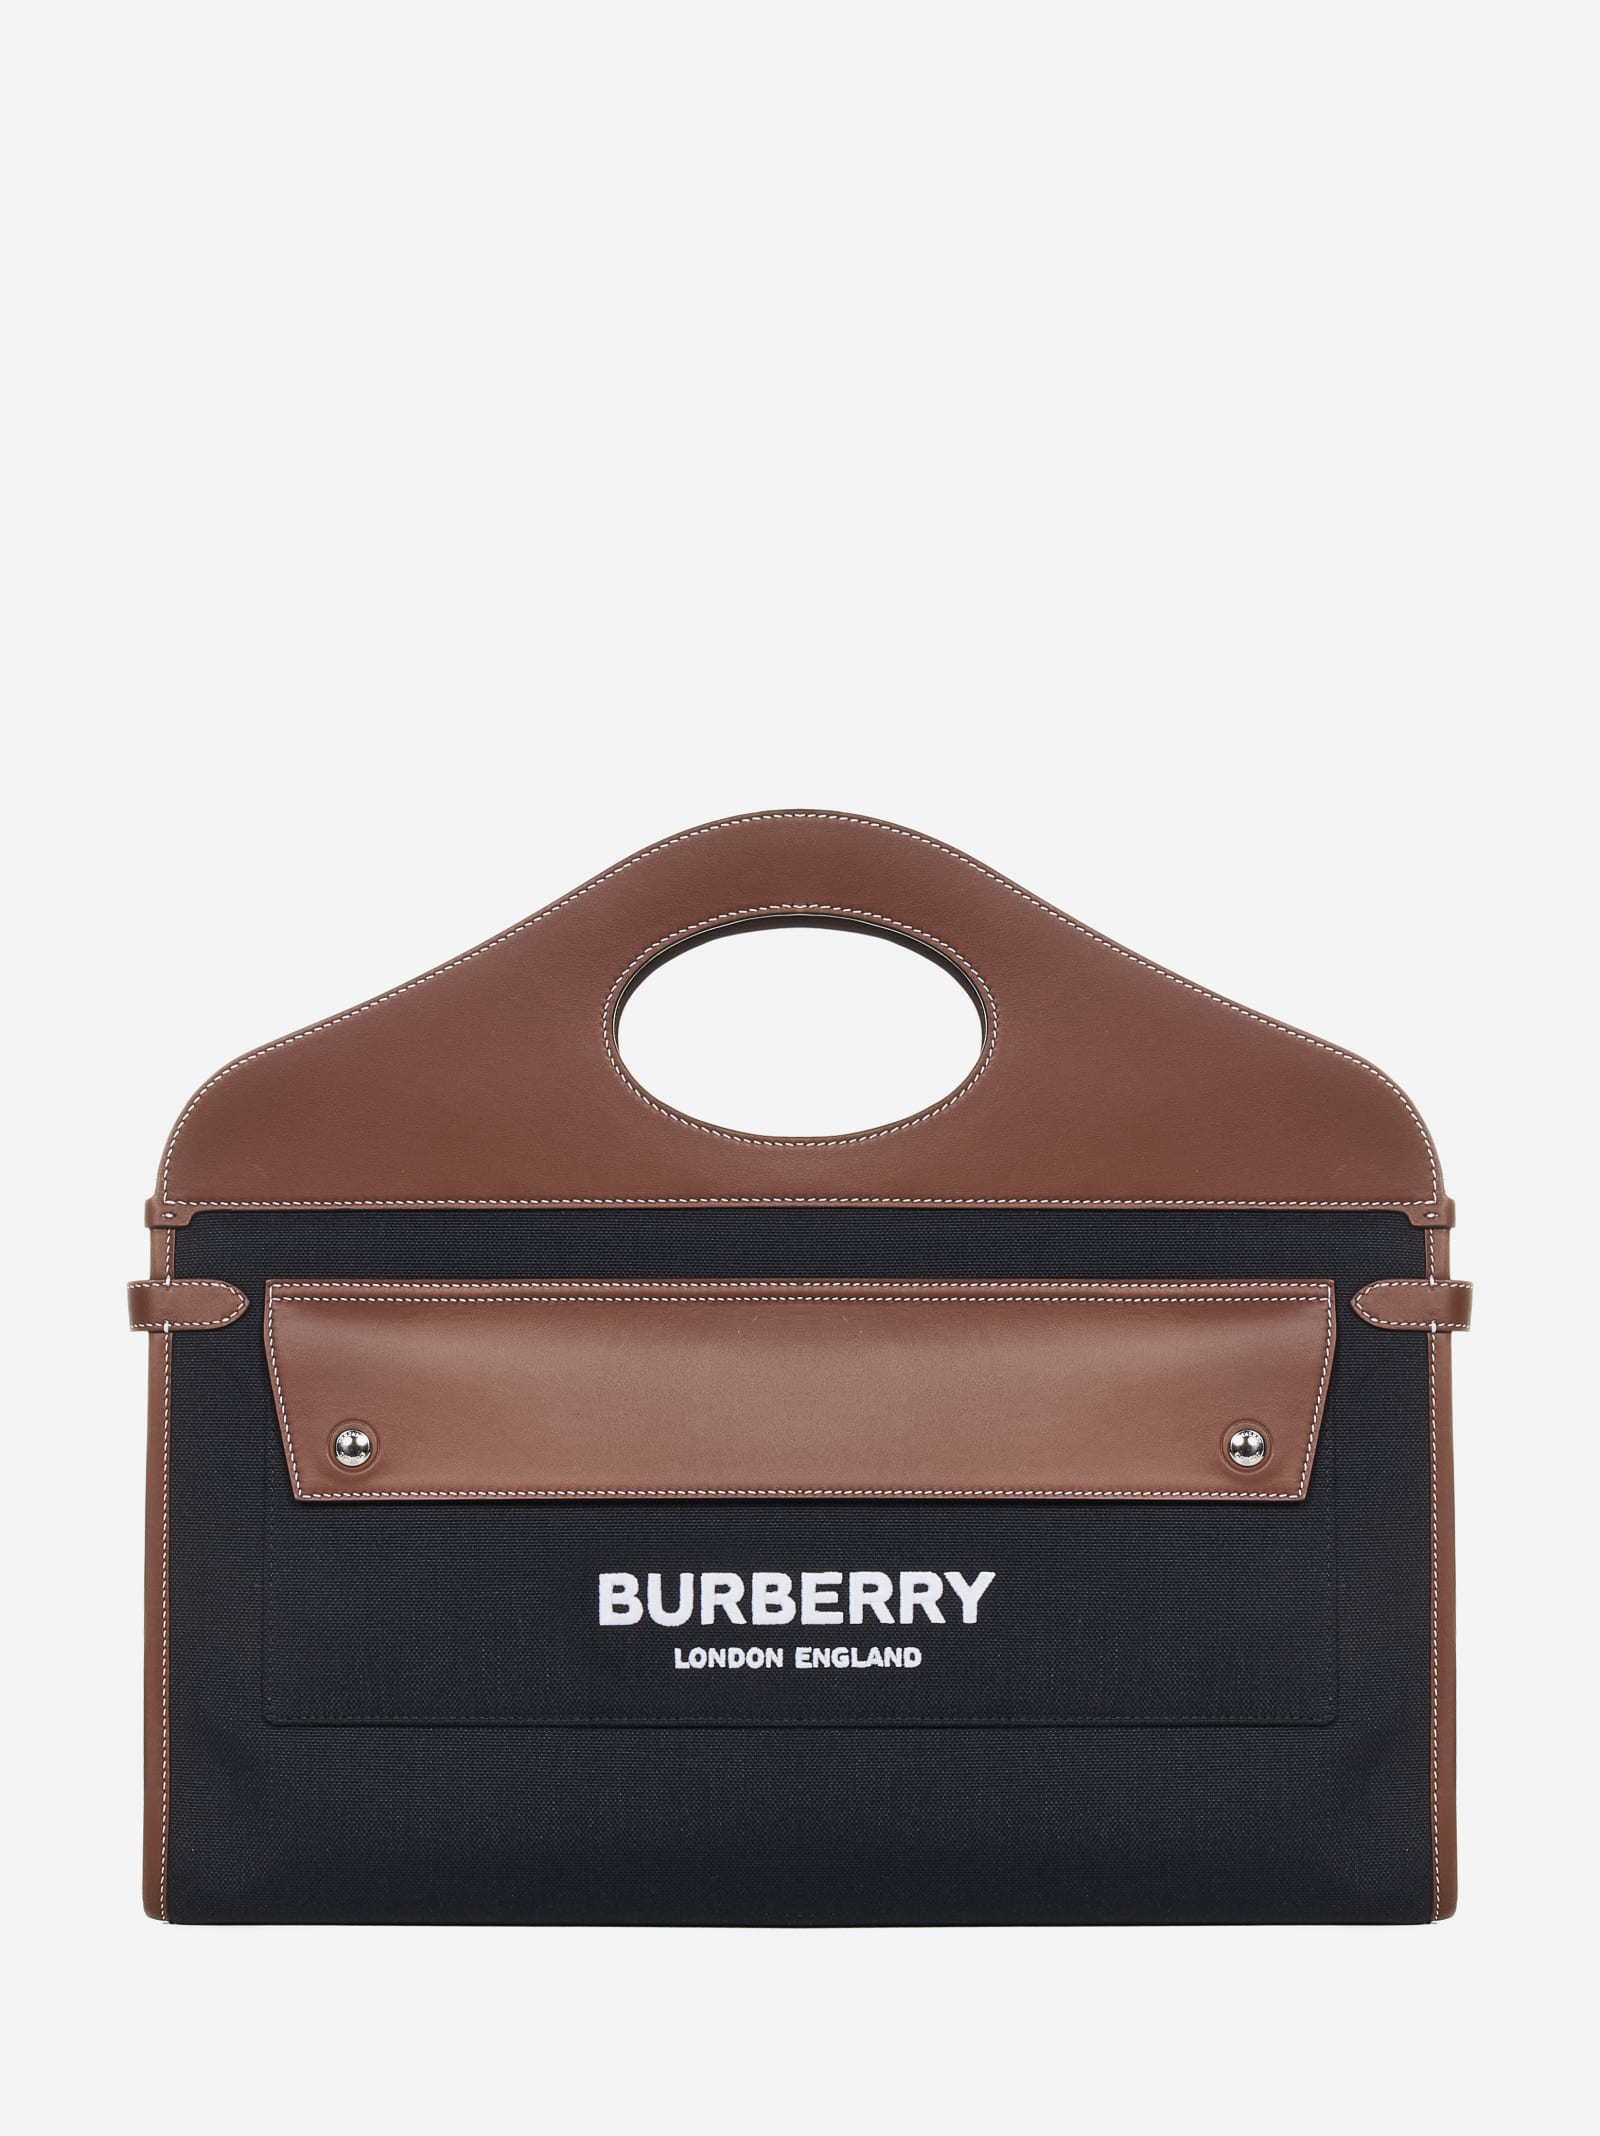 Burberry Pocket Tote